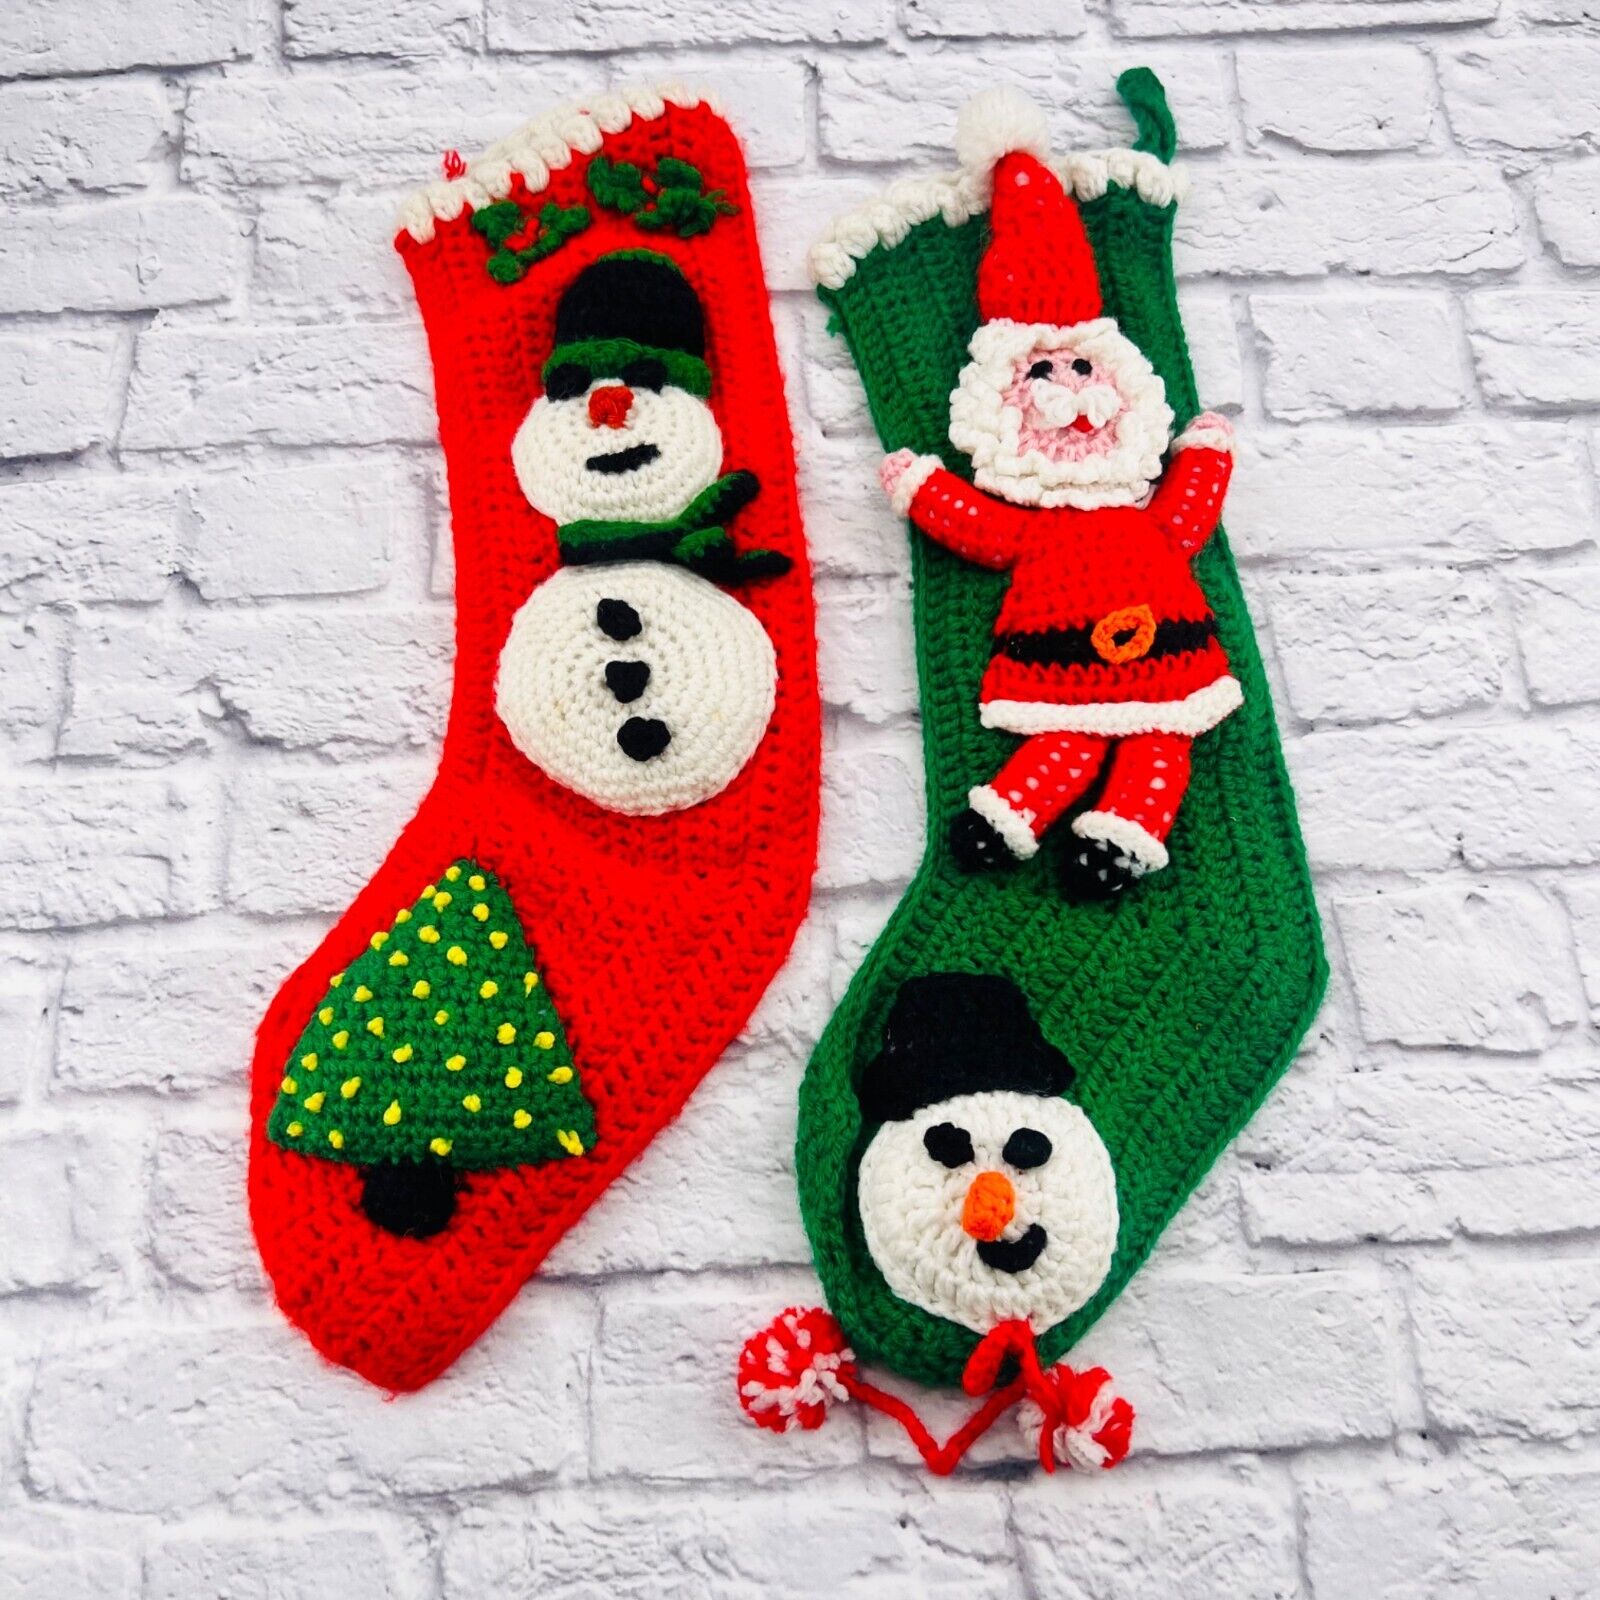 Handmade Vintage Crochet Christmas Stockings 2 PCS Red/Green Santa Snowman